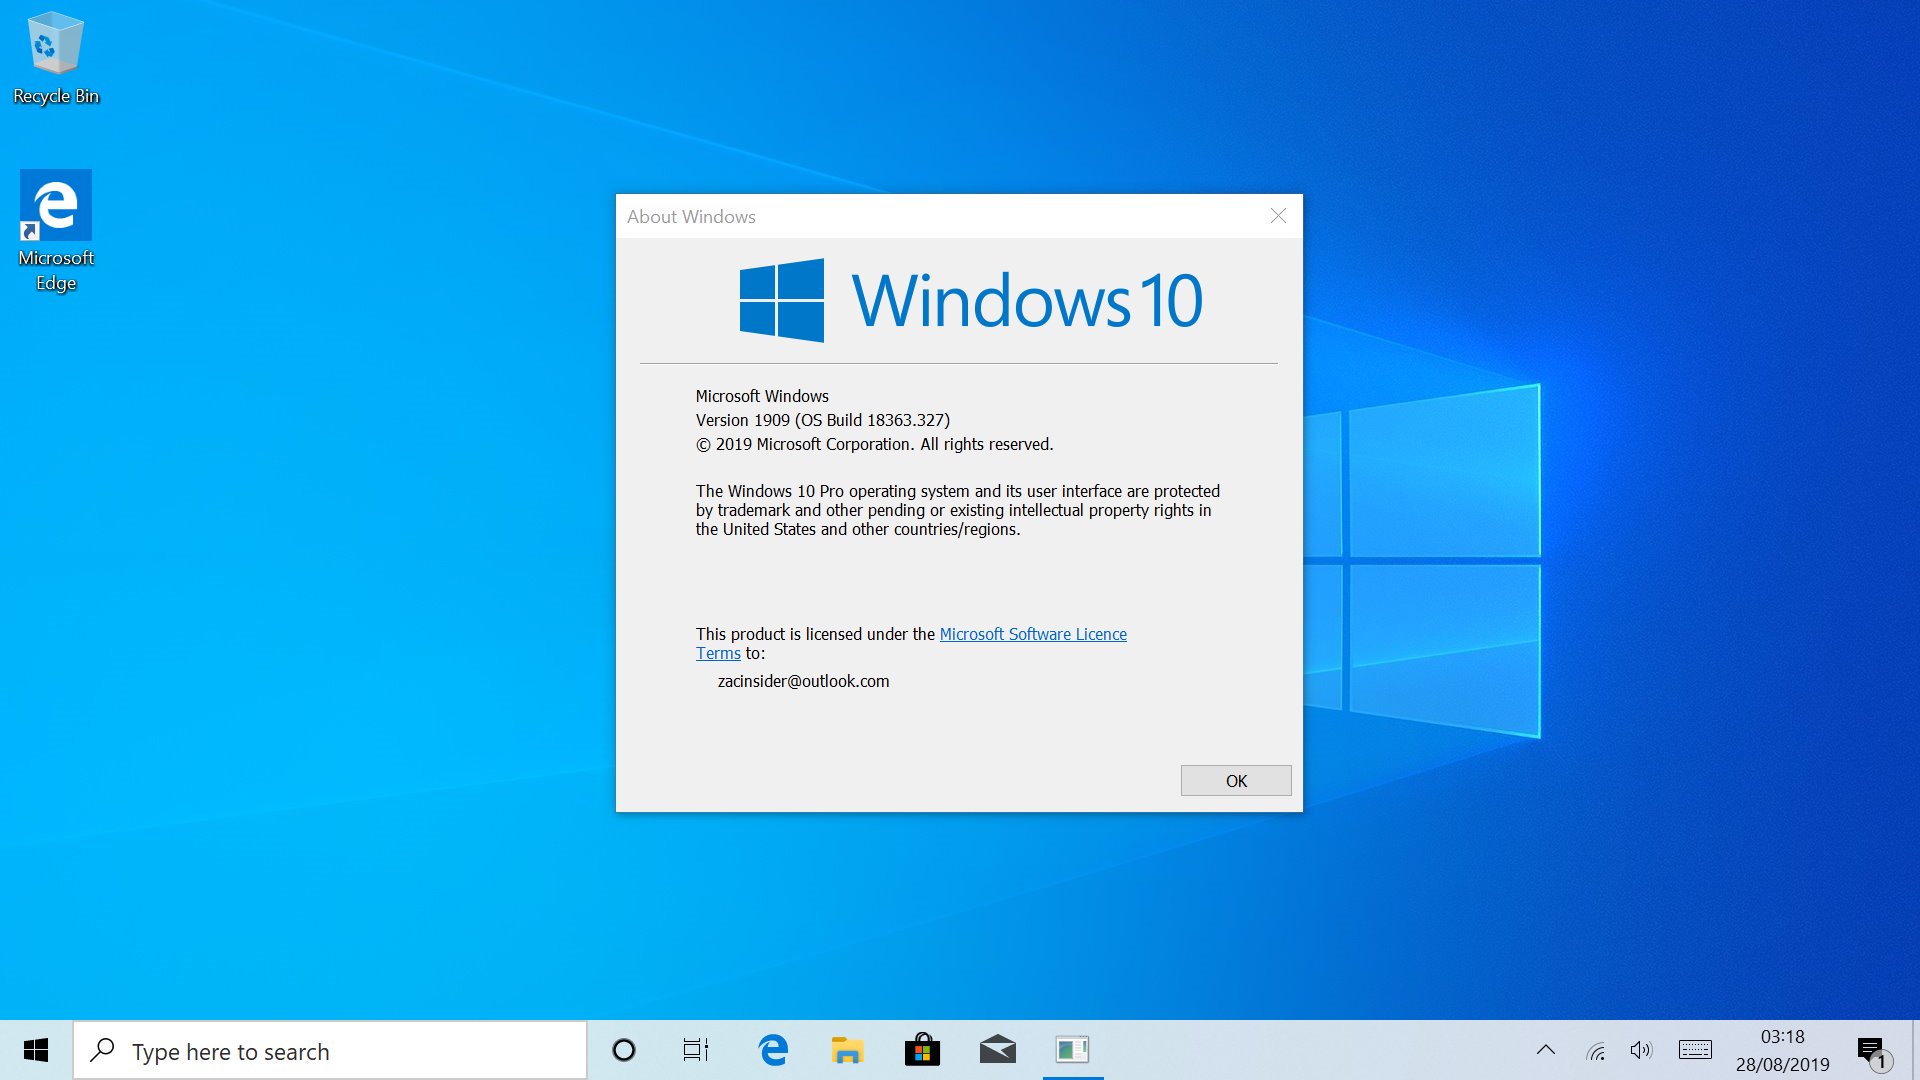 Enable windows 10. Windows 10 Pro 21h1. Windows 10 версии 1909. Windows 10 последняя версия. Операционная система виндовс 10.